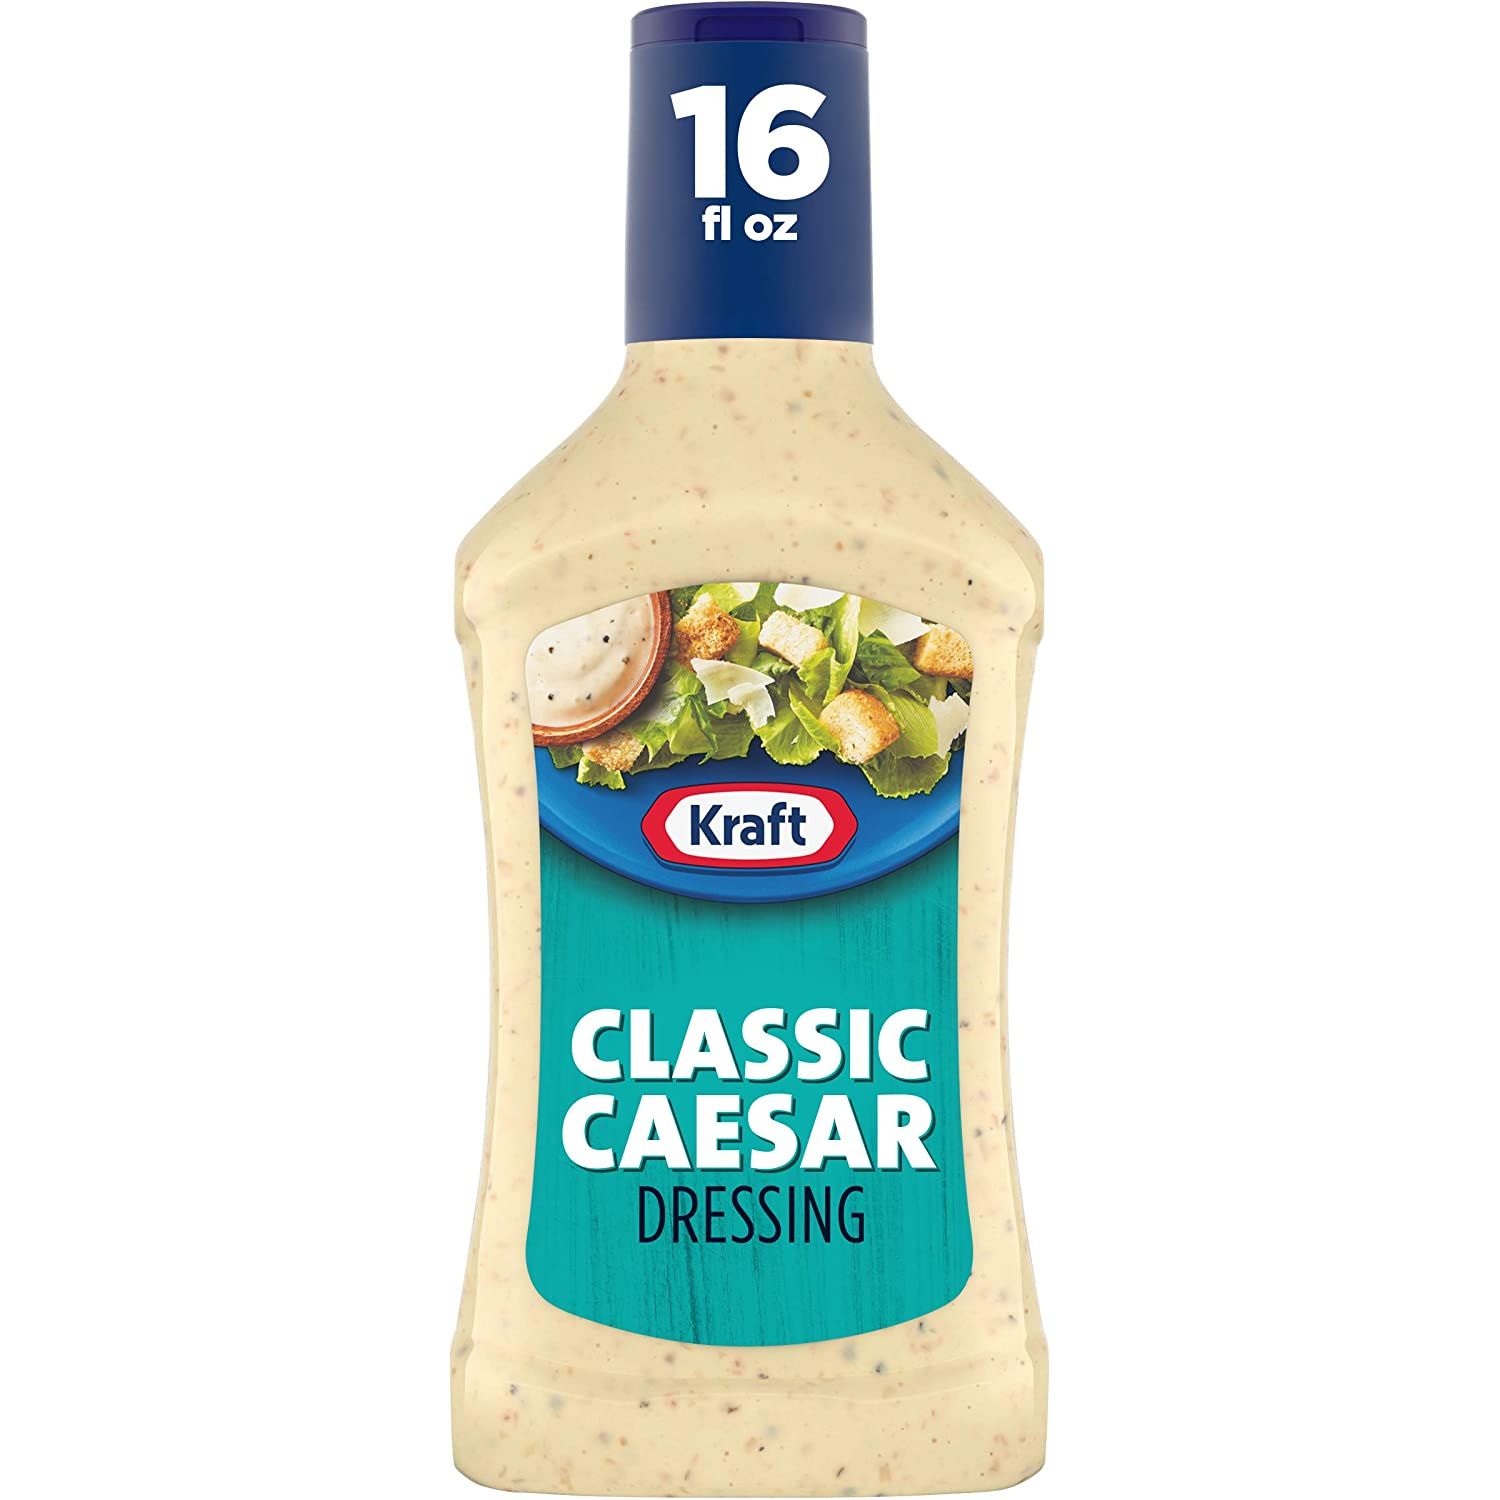 Kraft Classic Caesar Dressing Image